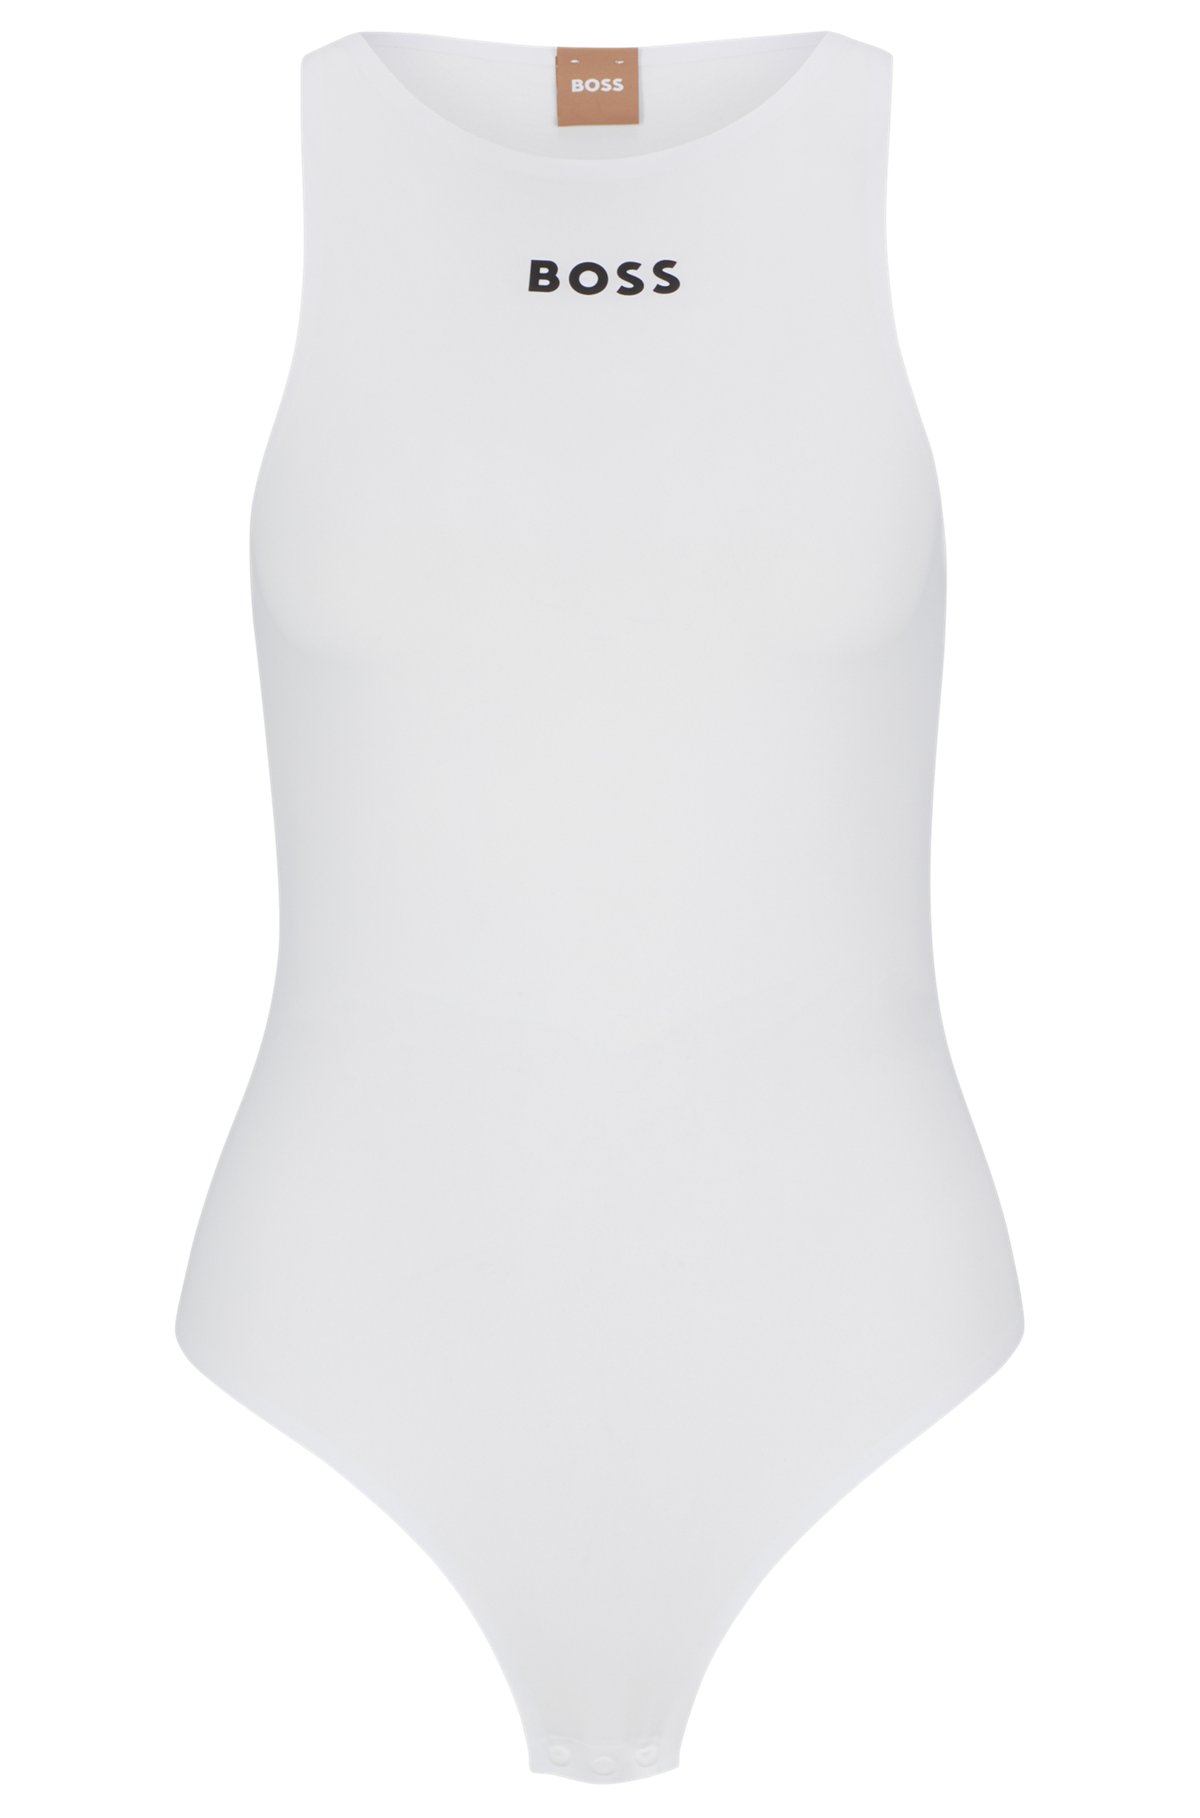 Sleeveless bodysuit with contrast logo, White